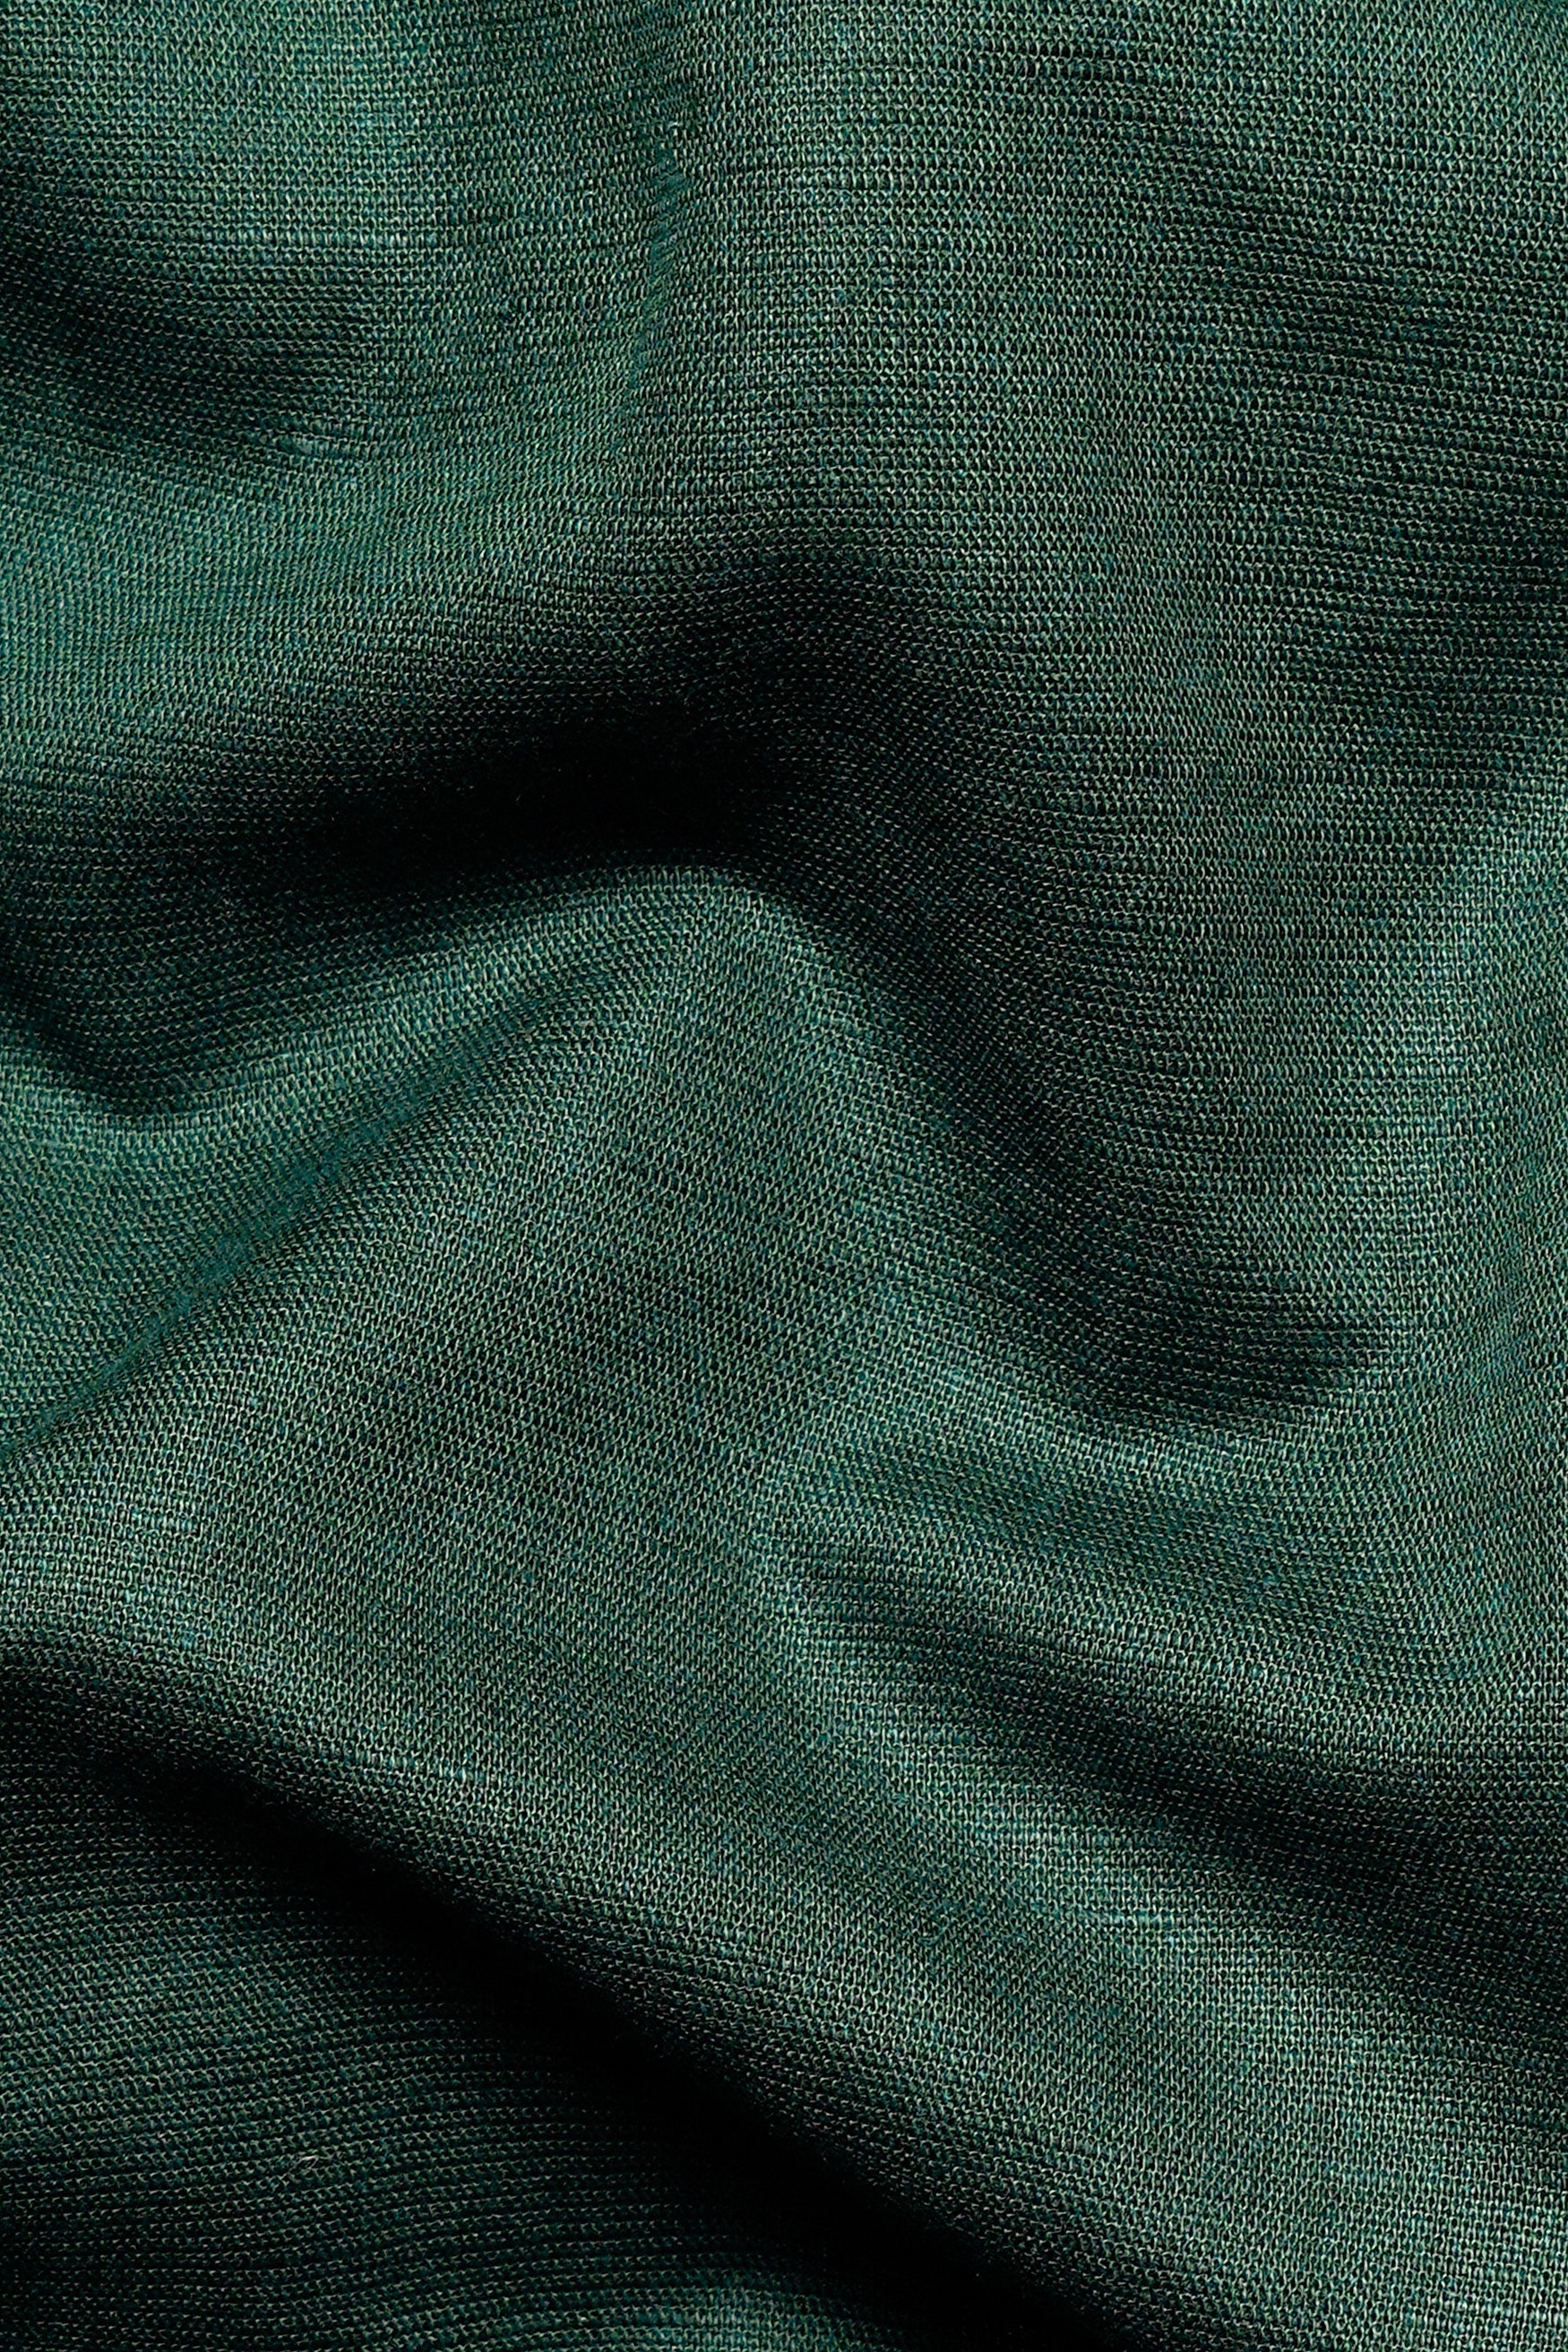 Phthalo Green Subtle Sheen Super Soft Premium Cotton Shirt